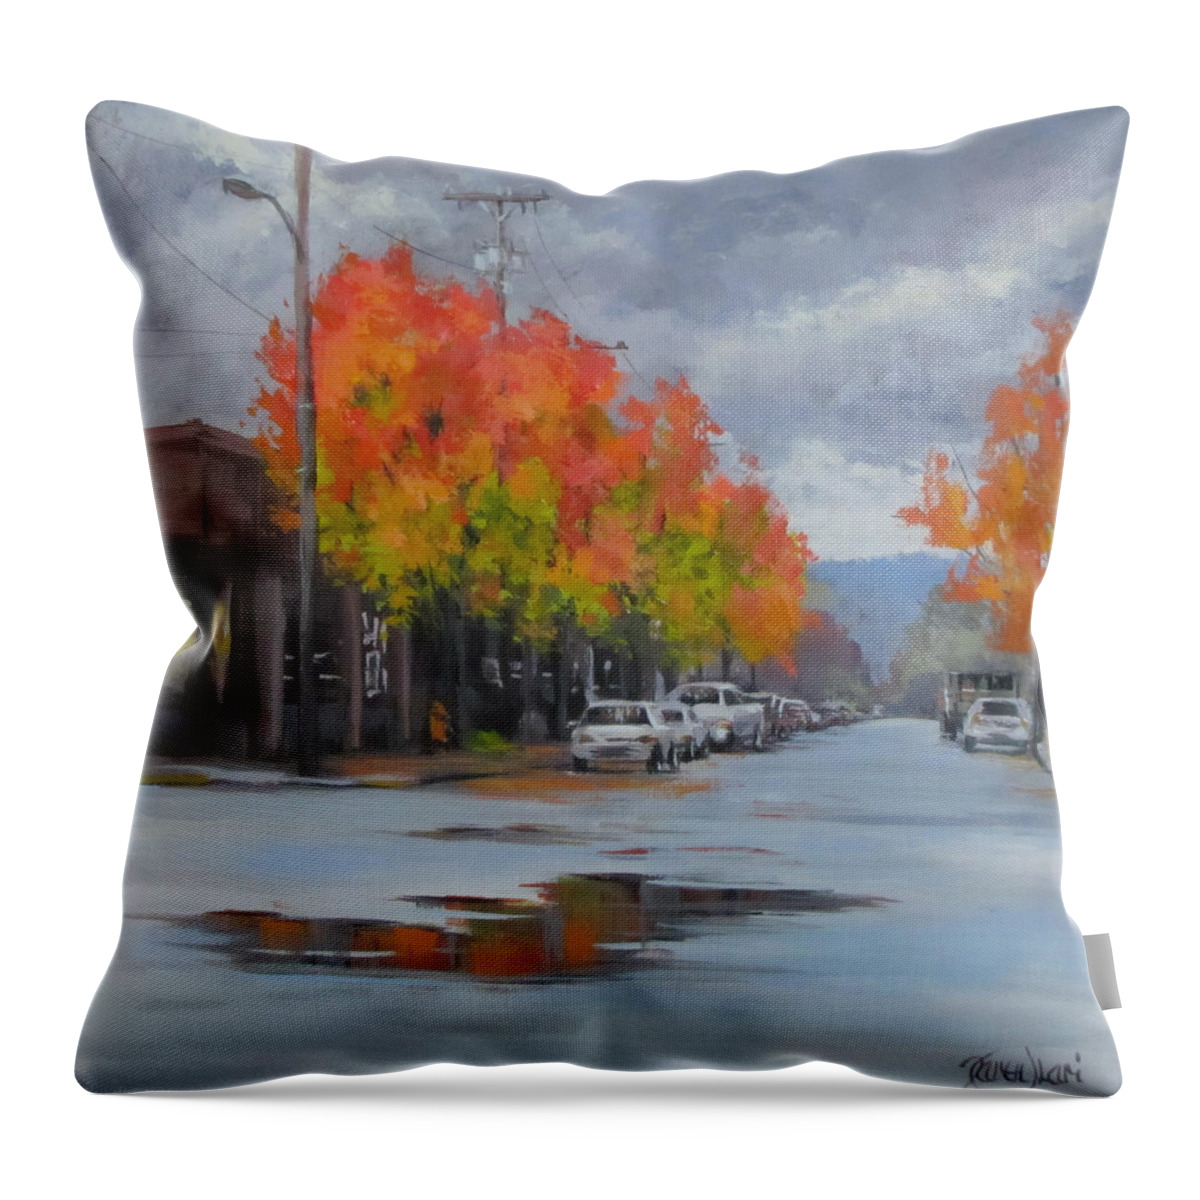 Autumn Throw Pillow featuring the painting Urban Autumn by Karen Ilari